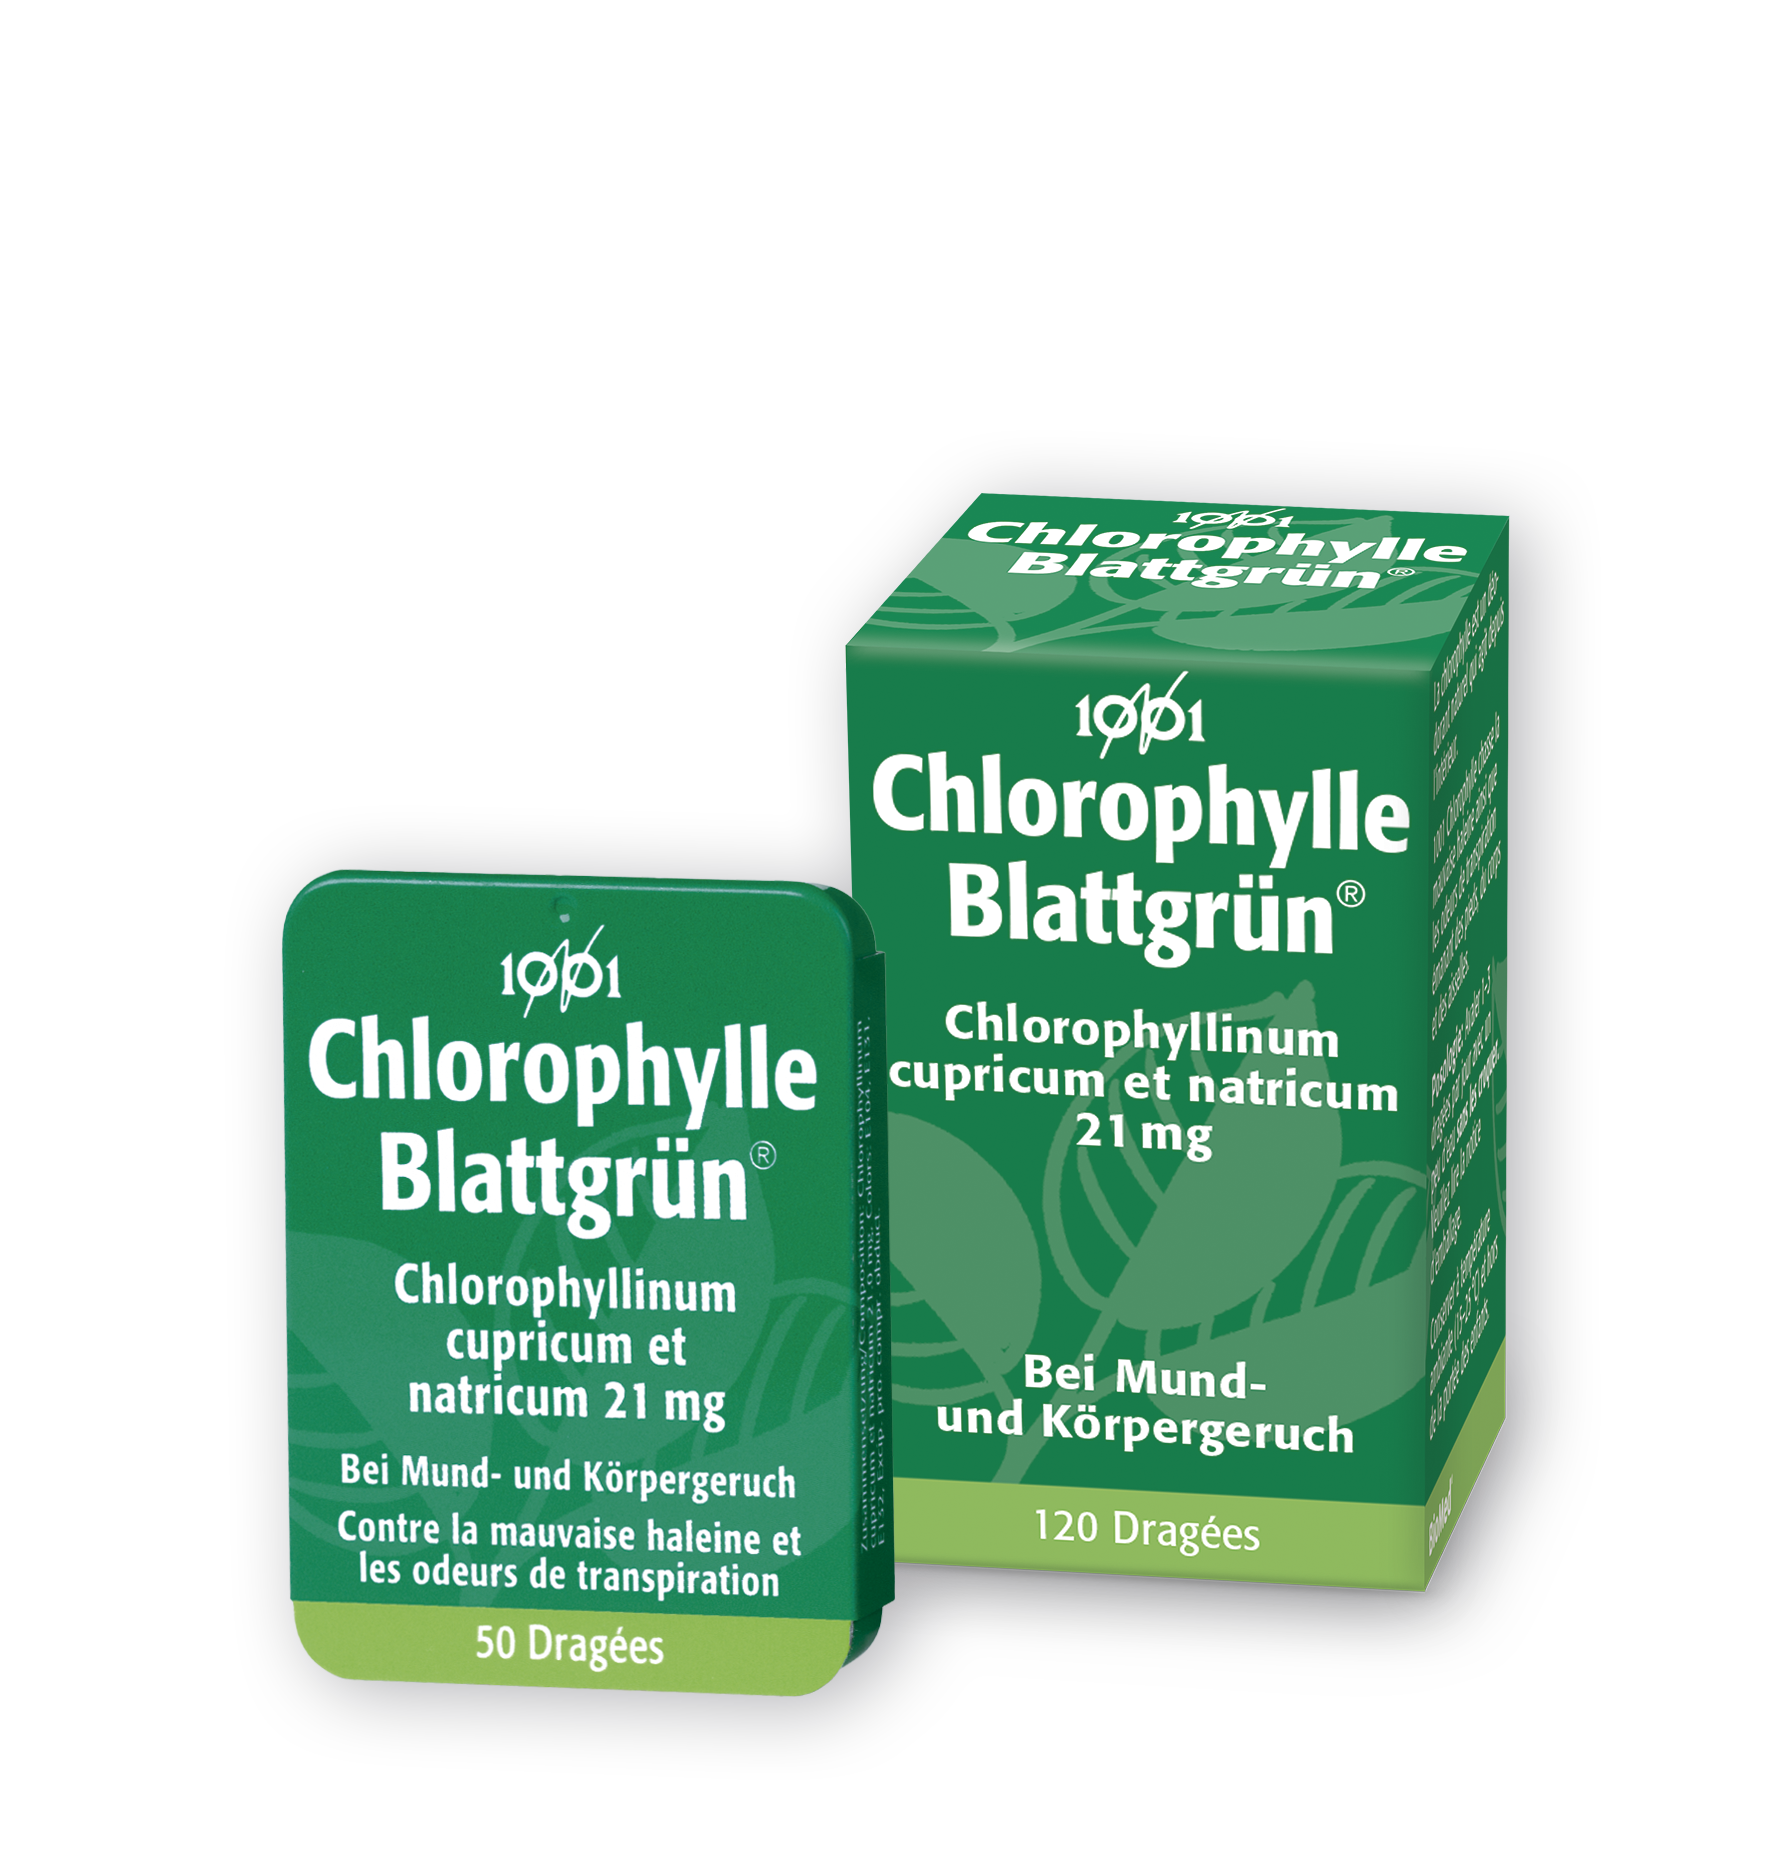 Chlorophyll Tabletten Wirkung Chlorophyll Das Getränk gegen